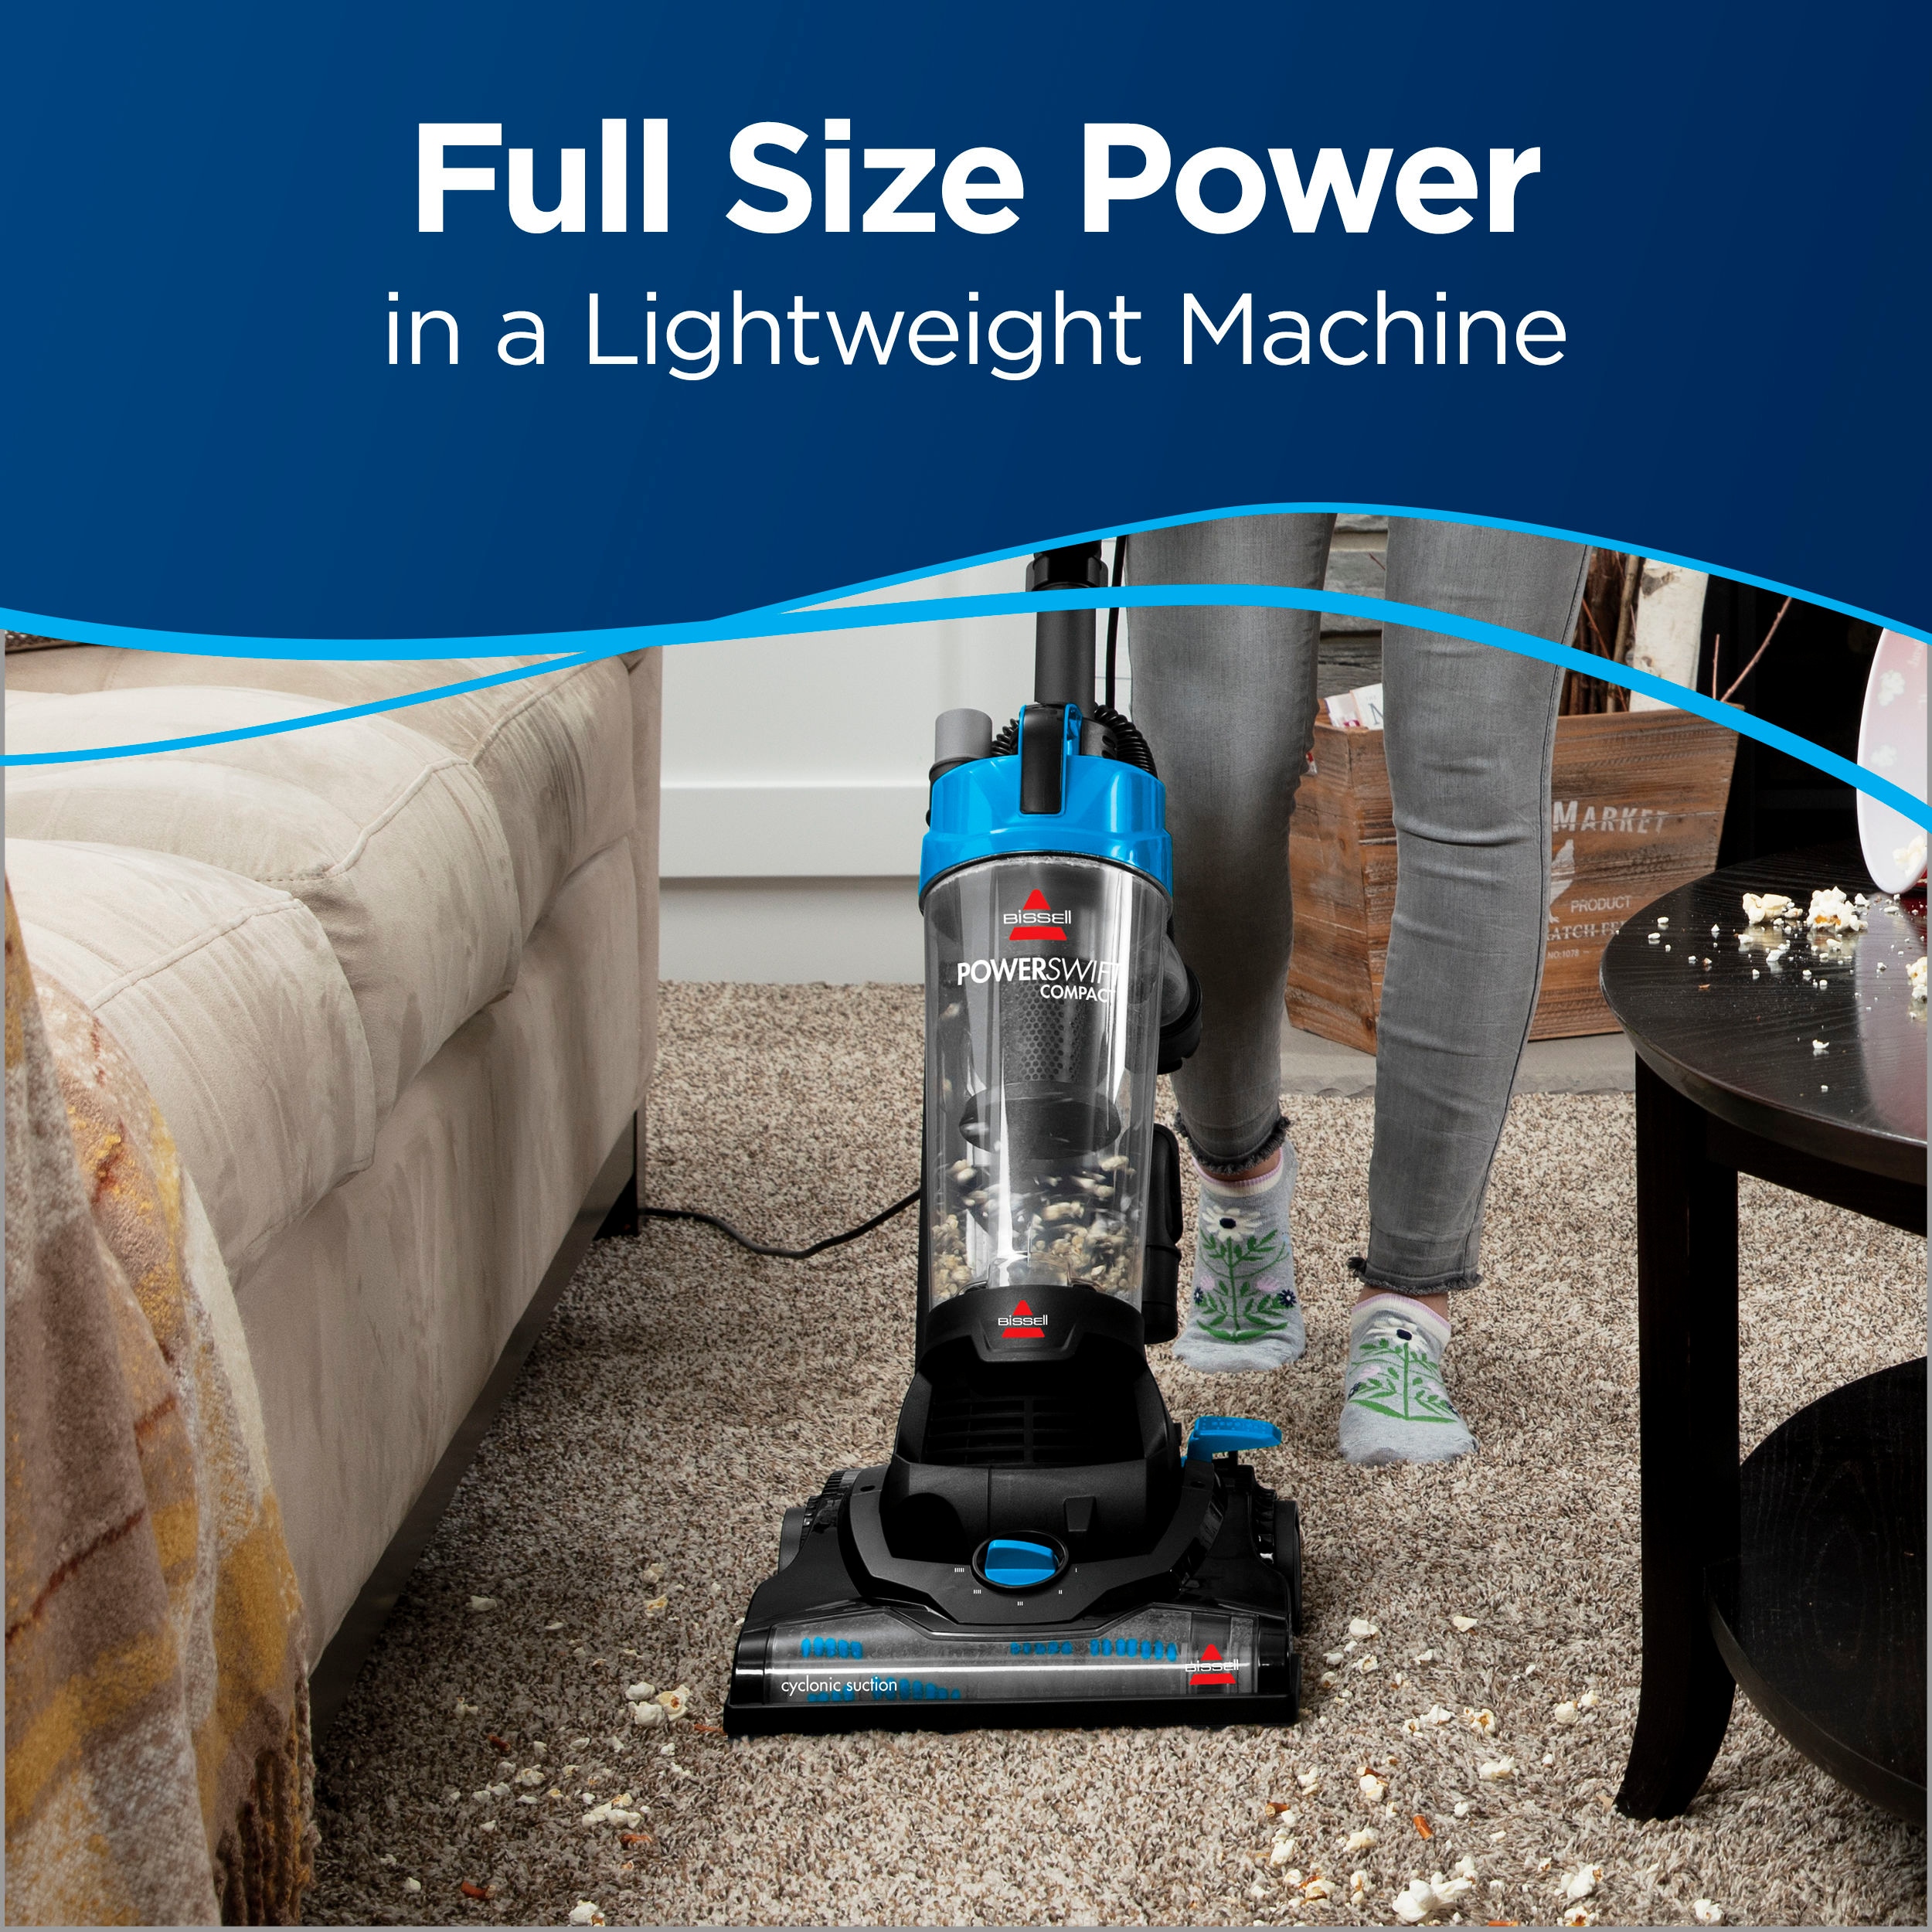 PowerForce® Compact Lightweight Upright Vacuum